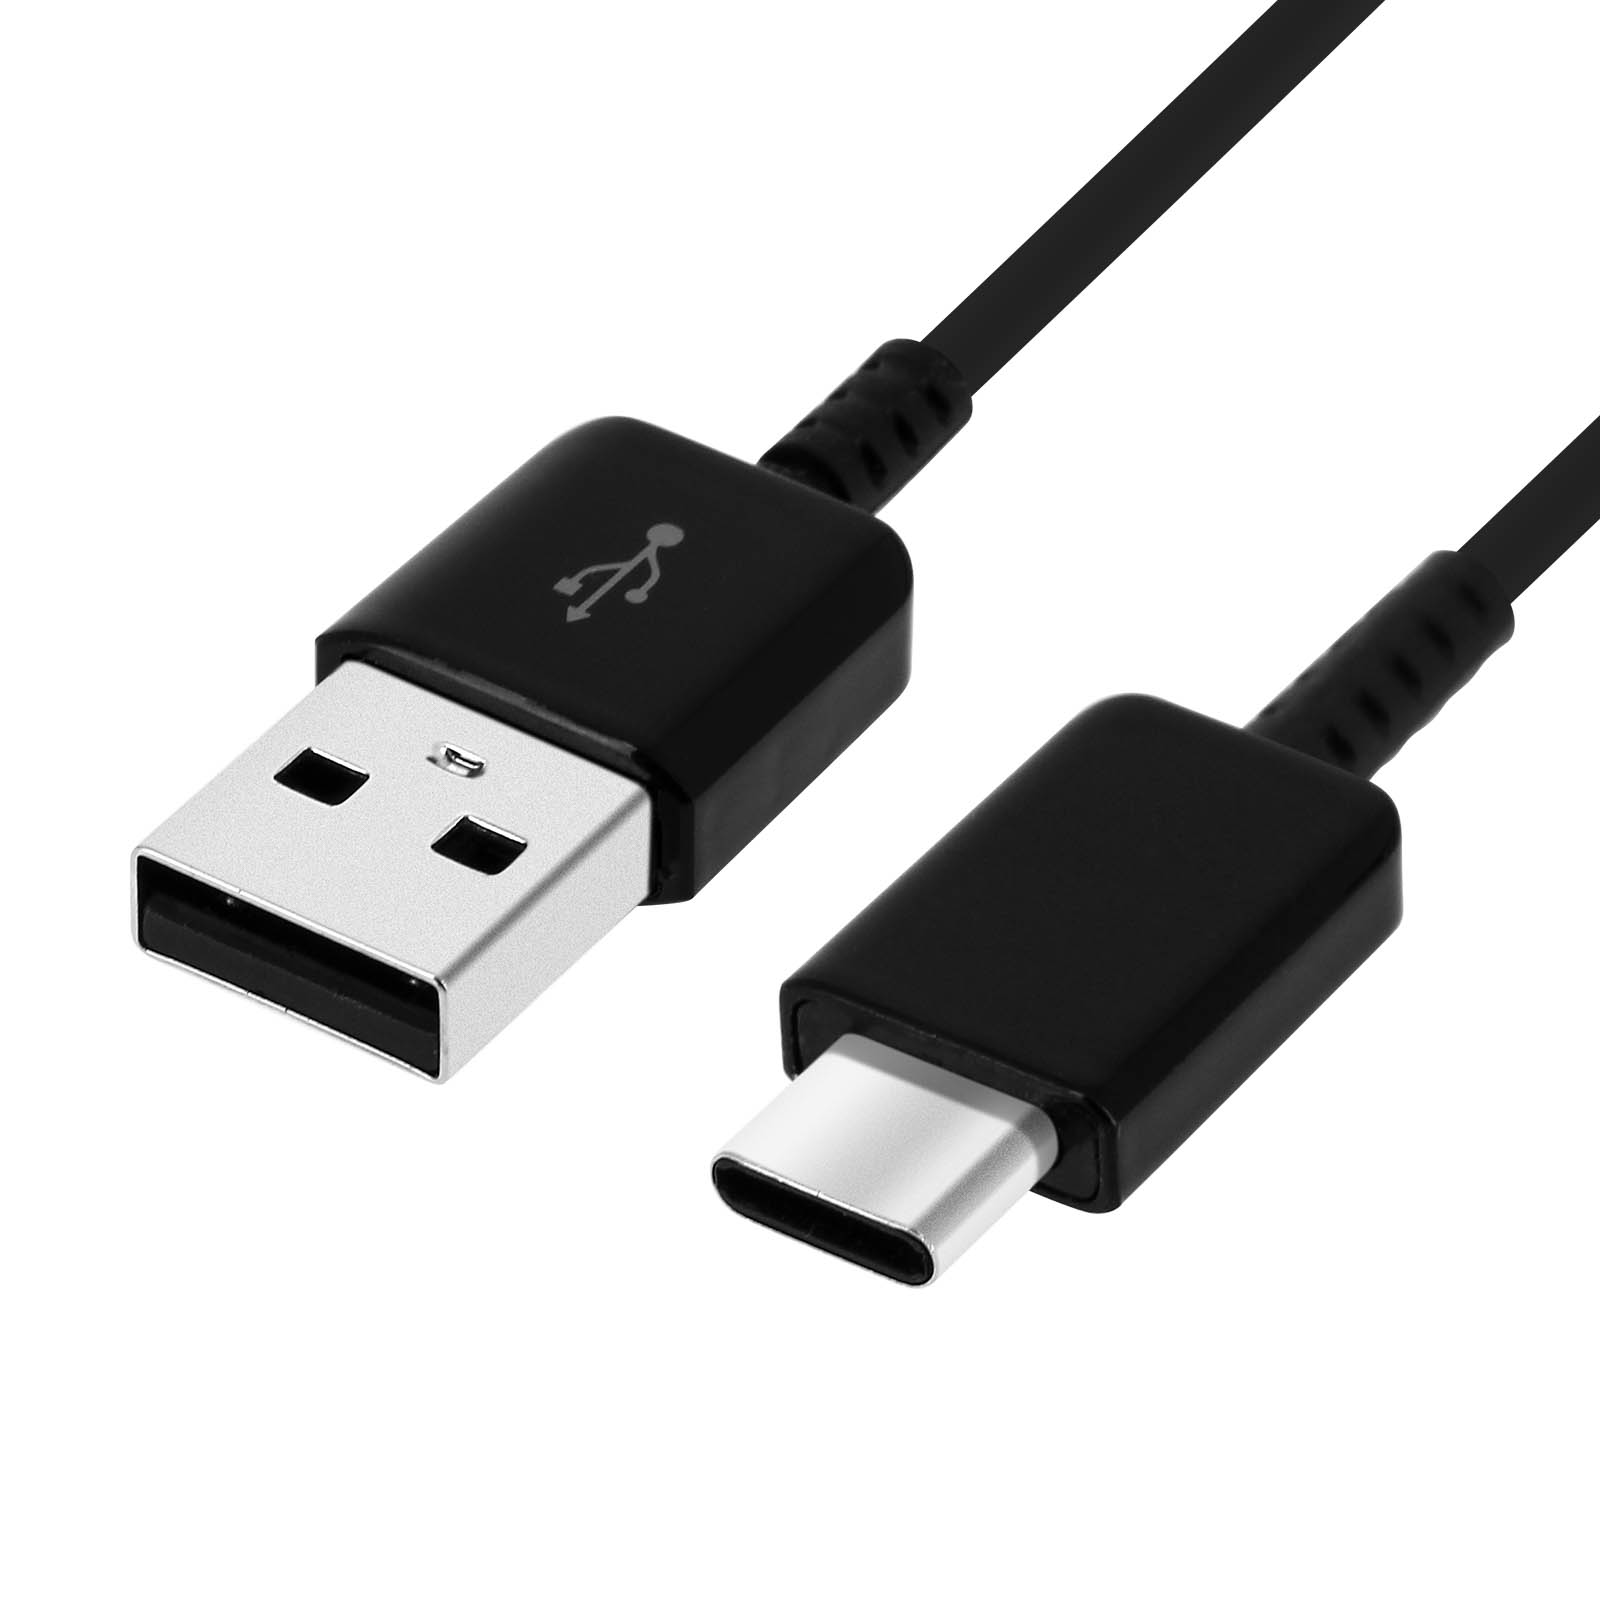 Cable USB TYPE-C Charge rapide Samsung Noir